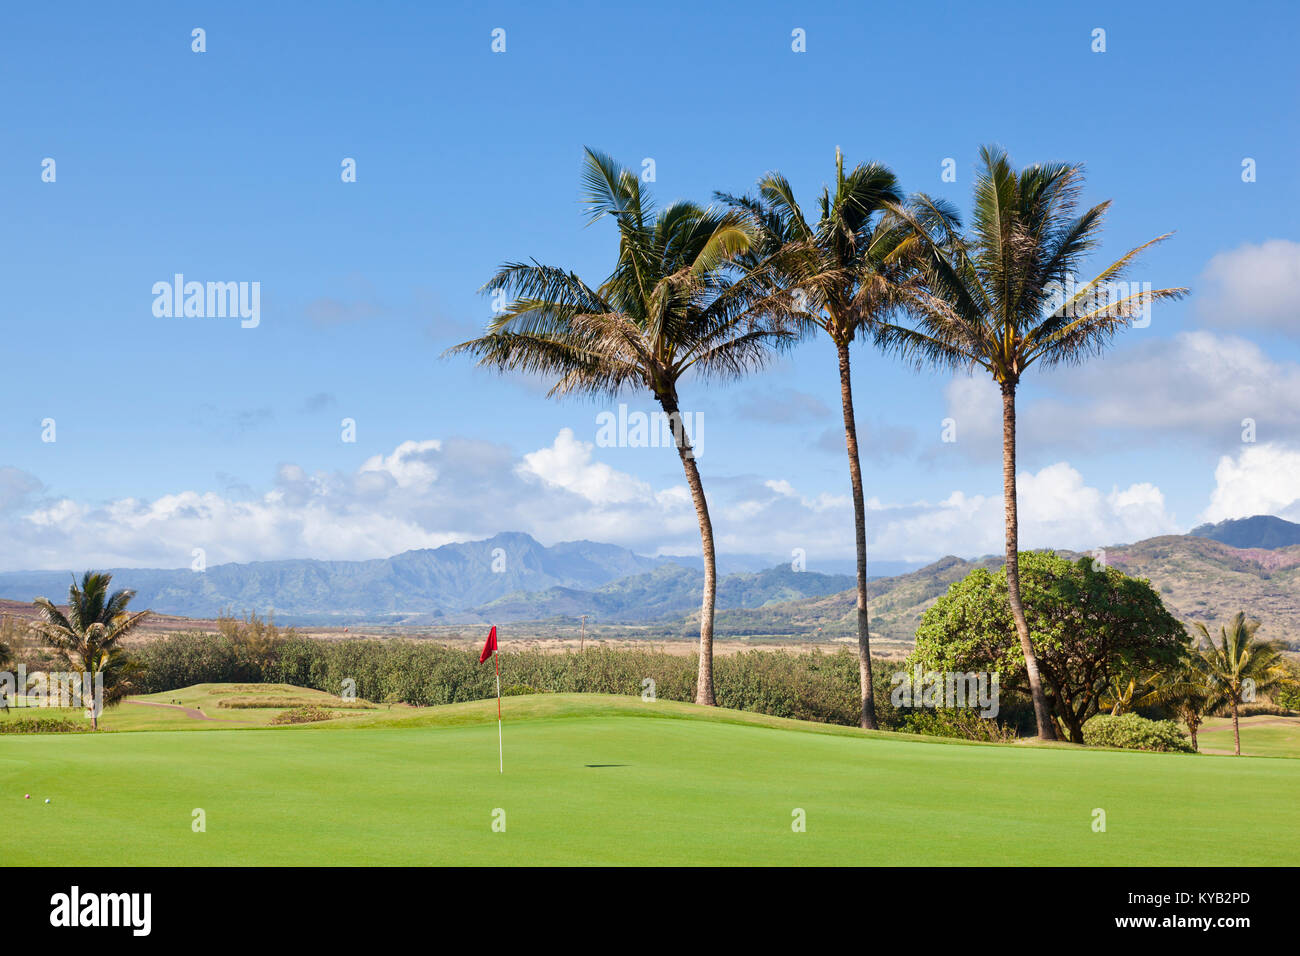 Palm trees at a golf course in Kauai, Hawaii. Stock Photo